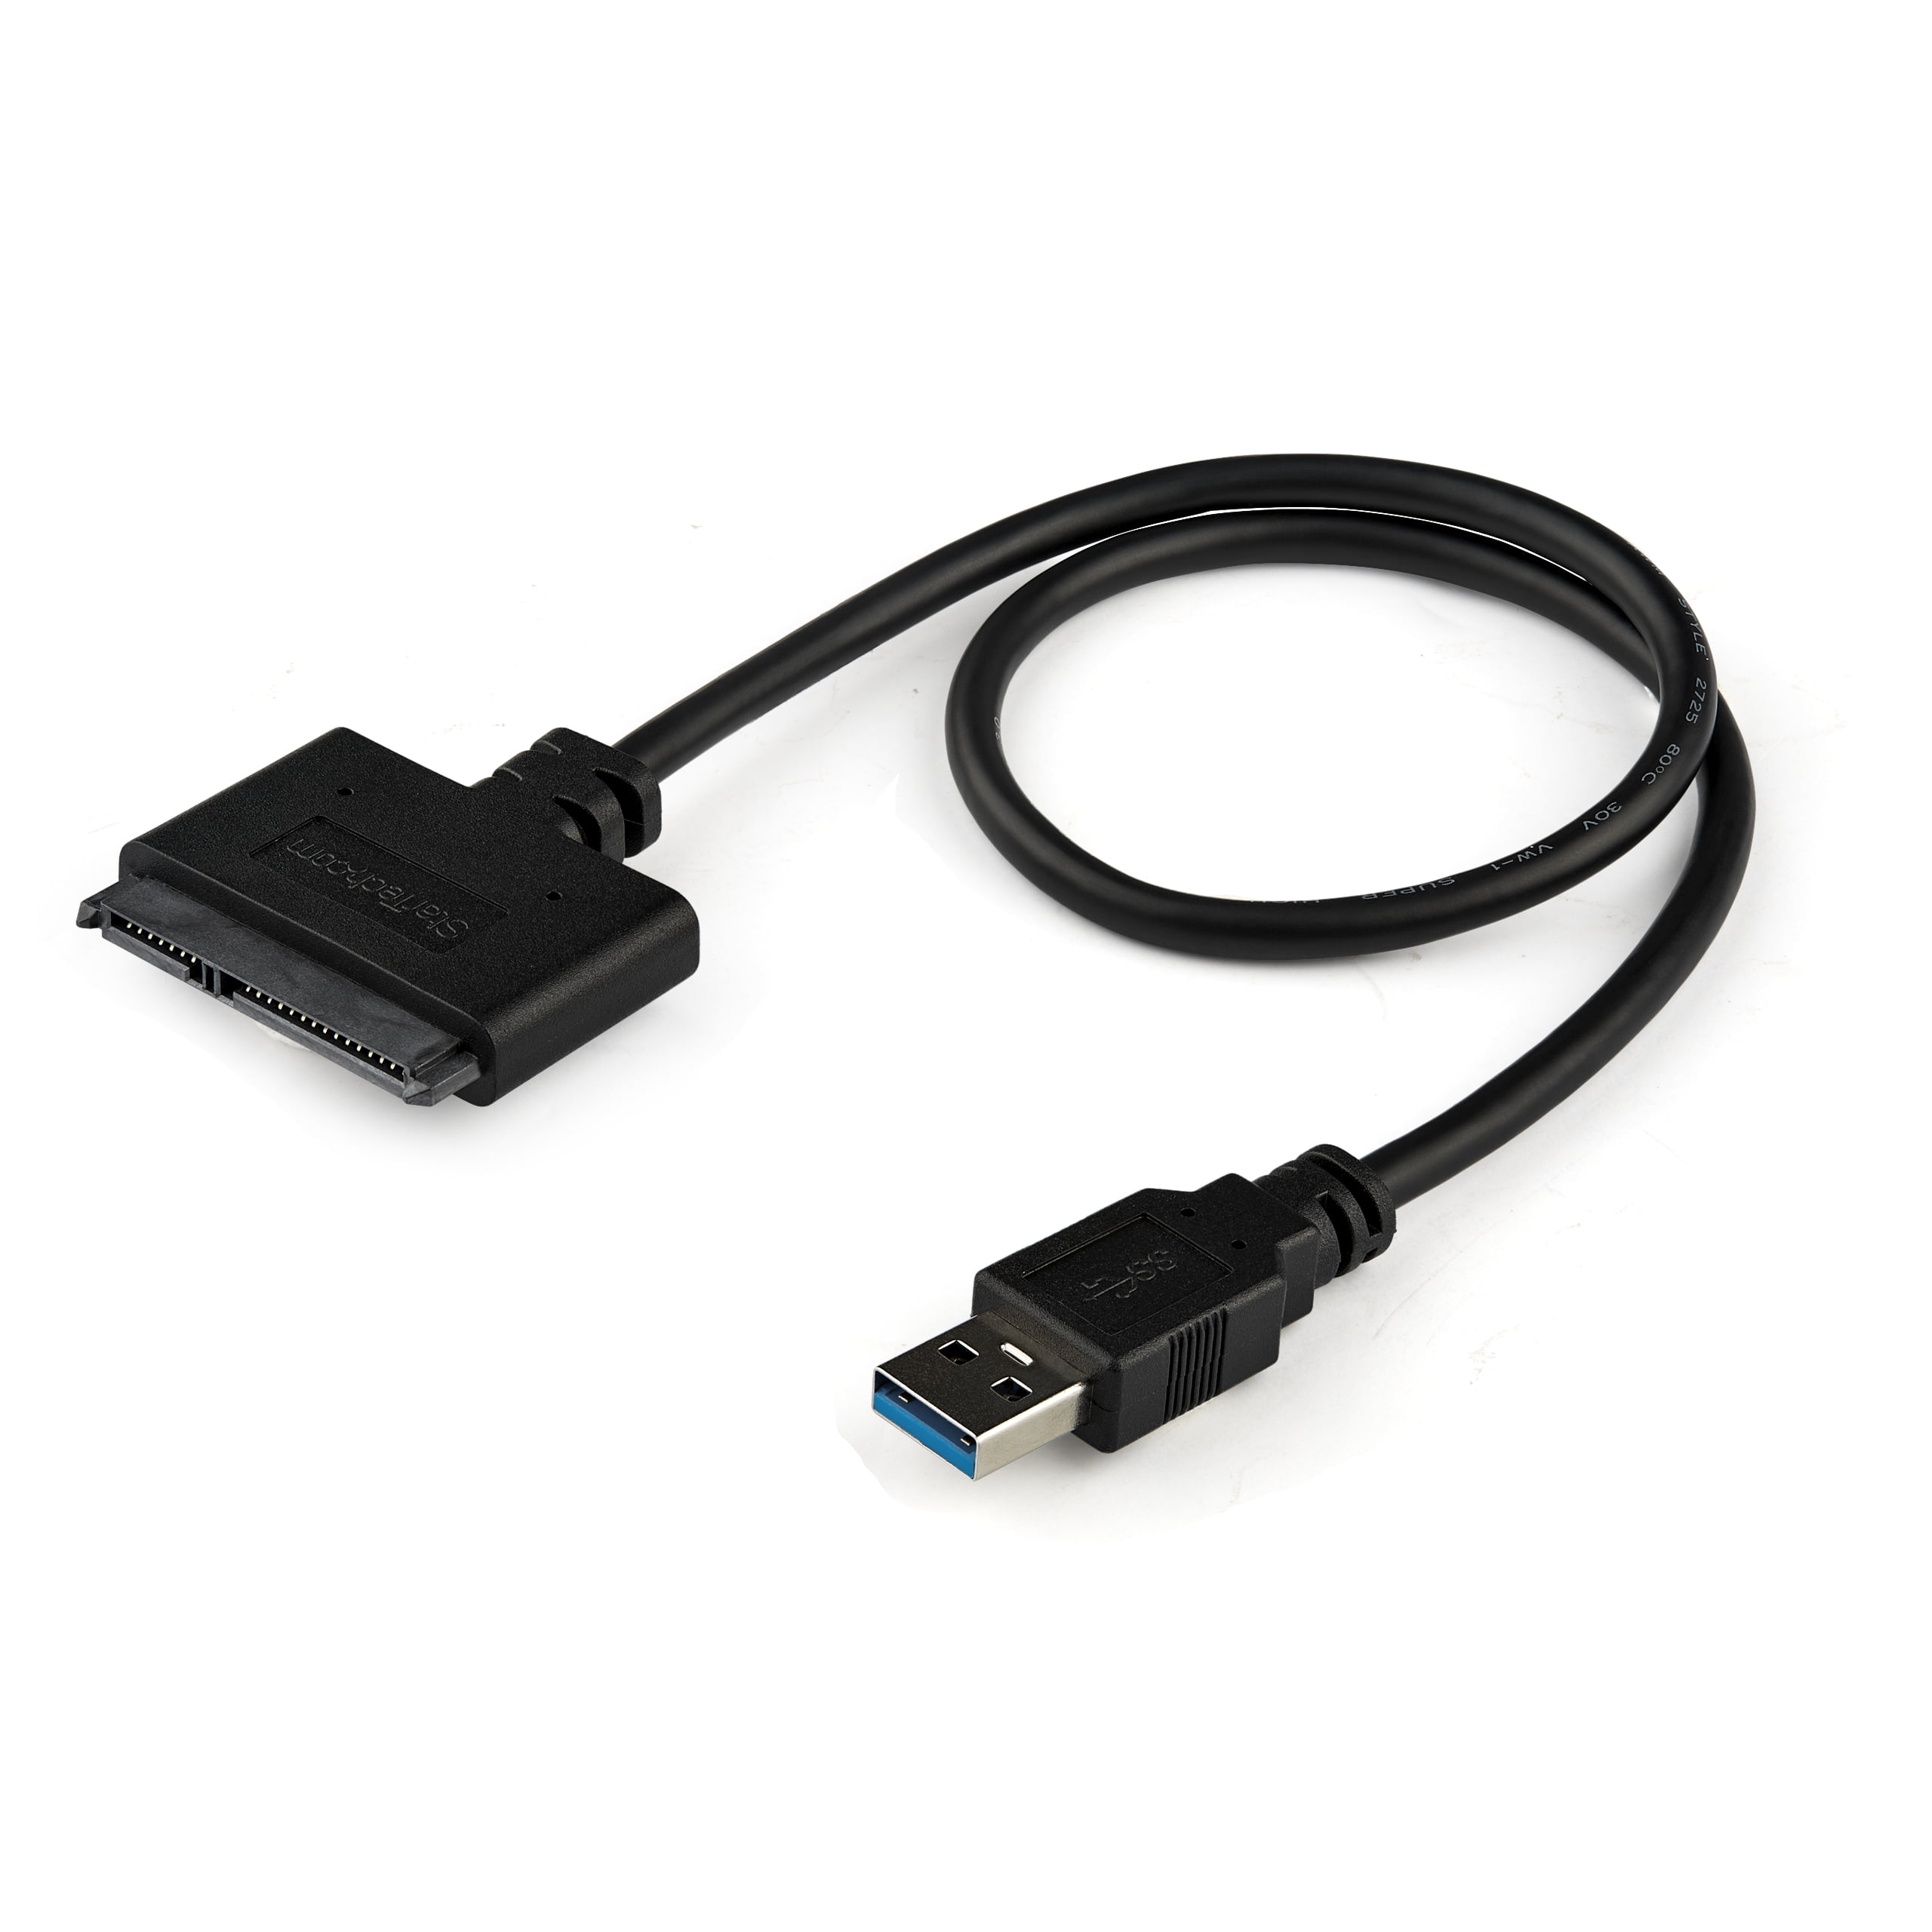 StarTech.com SATA USB Cable - USB 3.0 to 2.5” SATA III Hard Drive Adapter - External Converter for SSD/HDD Data Transfer - Walmart.com